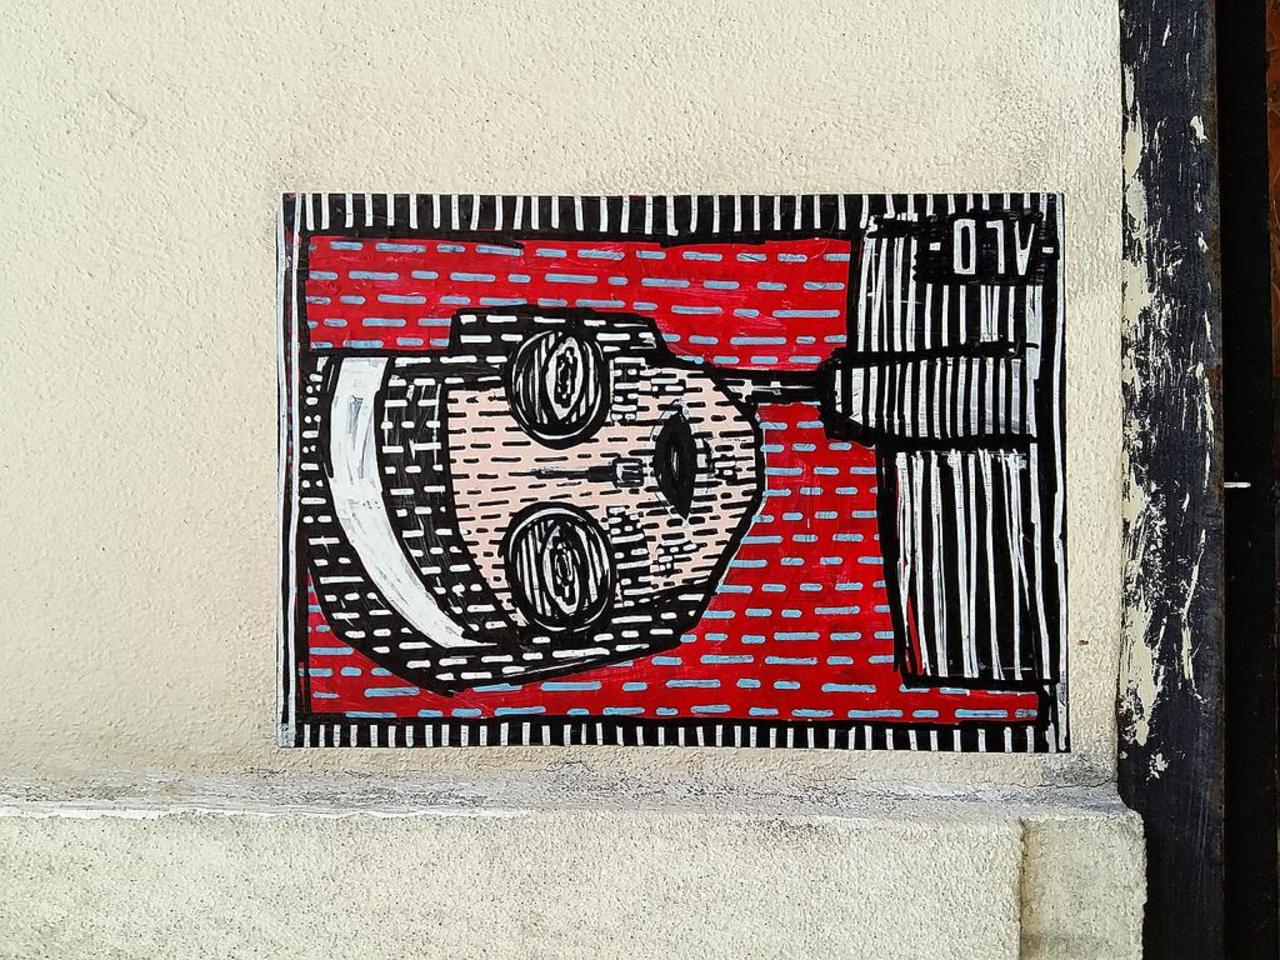 Street Art by alo_art in #Paris http://www.urbacolors.com #art #mural #graffiti #streetart http://t.co/chvxIsbo5G